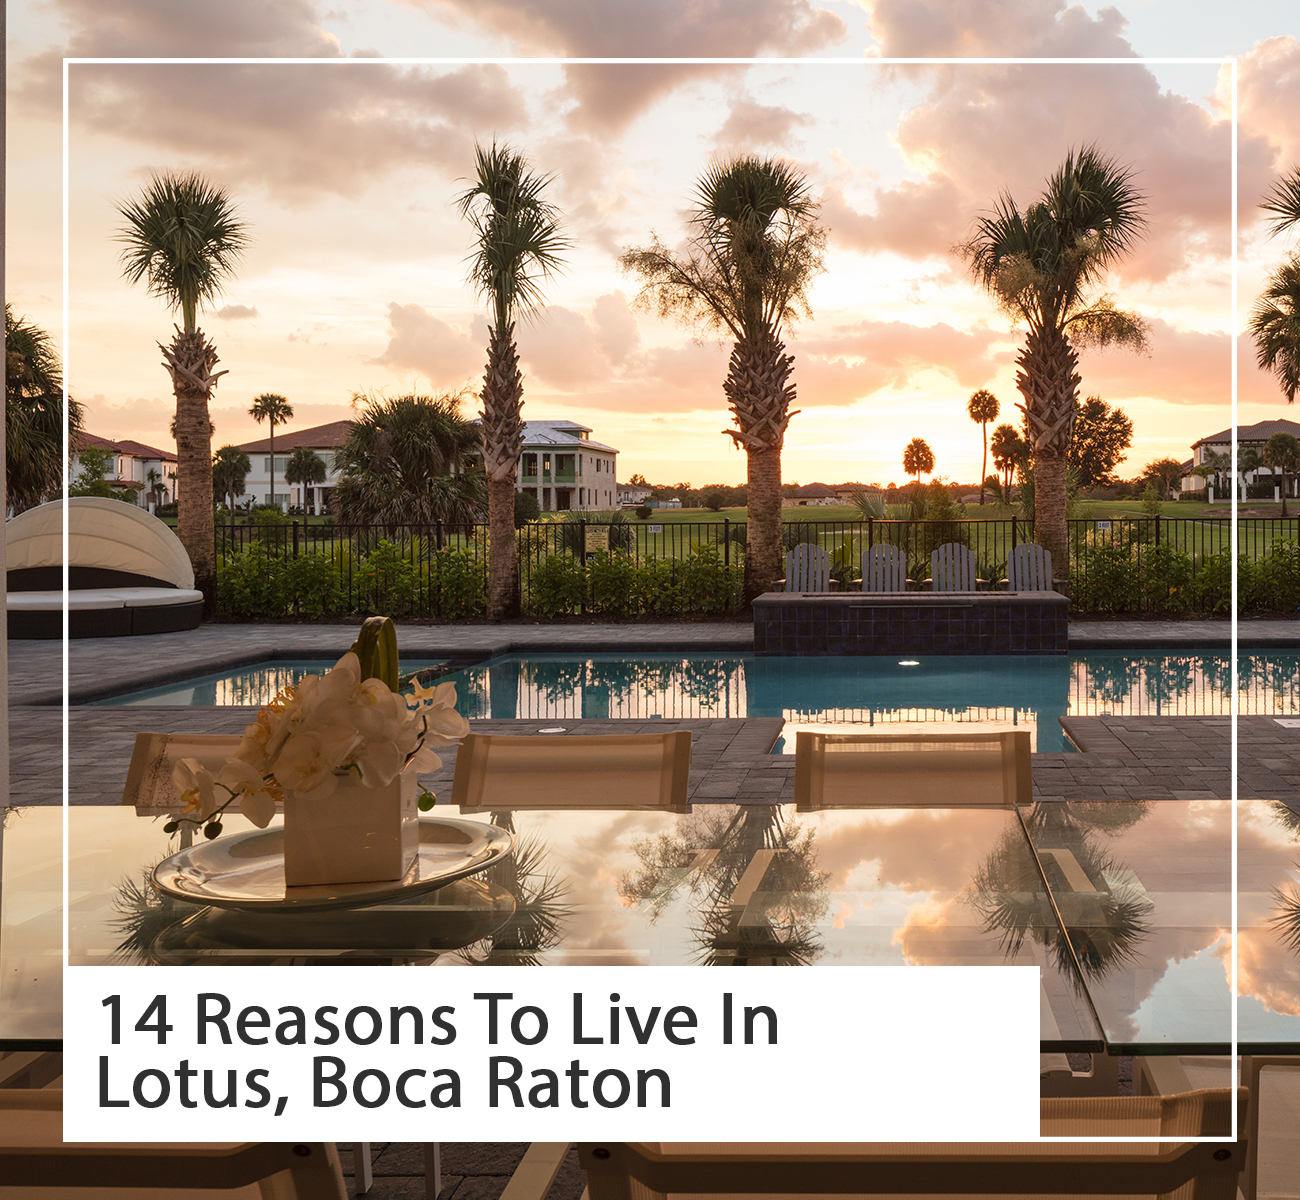 14 Reasons To Live In Lotus, Boca Raton